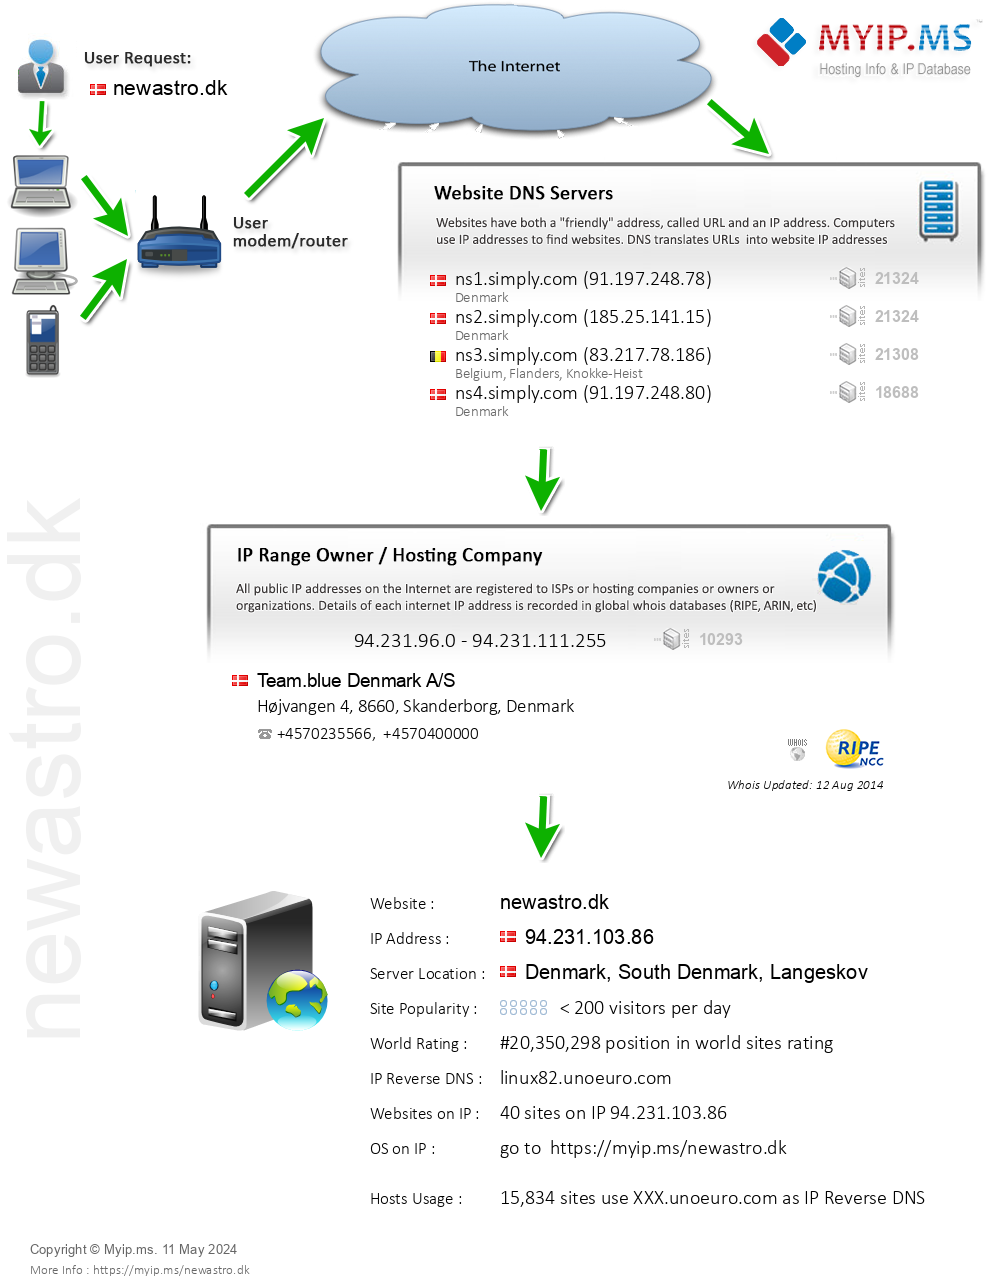 Newastro.dk - Website Hosting Visual IP Diagram